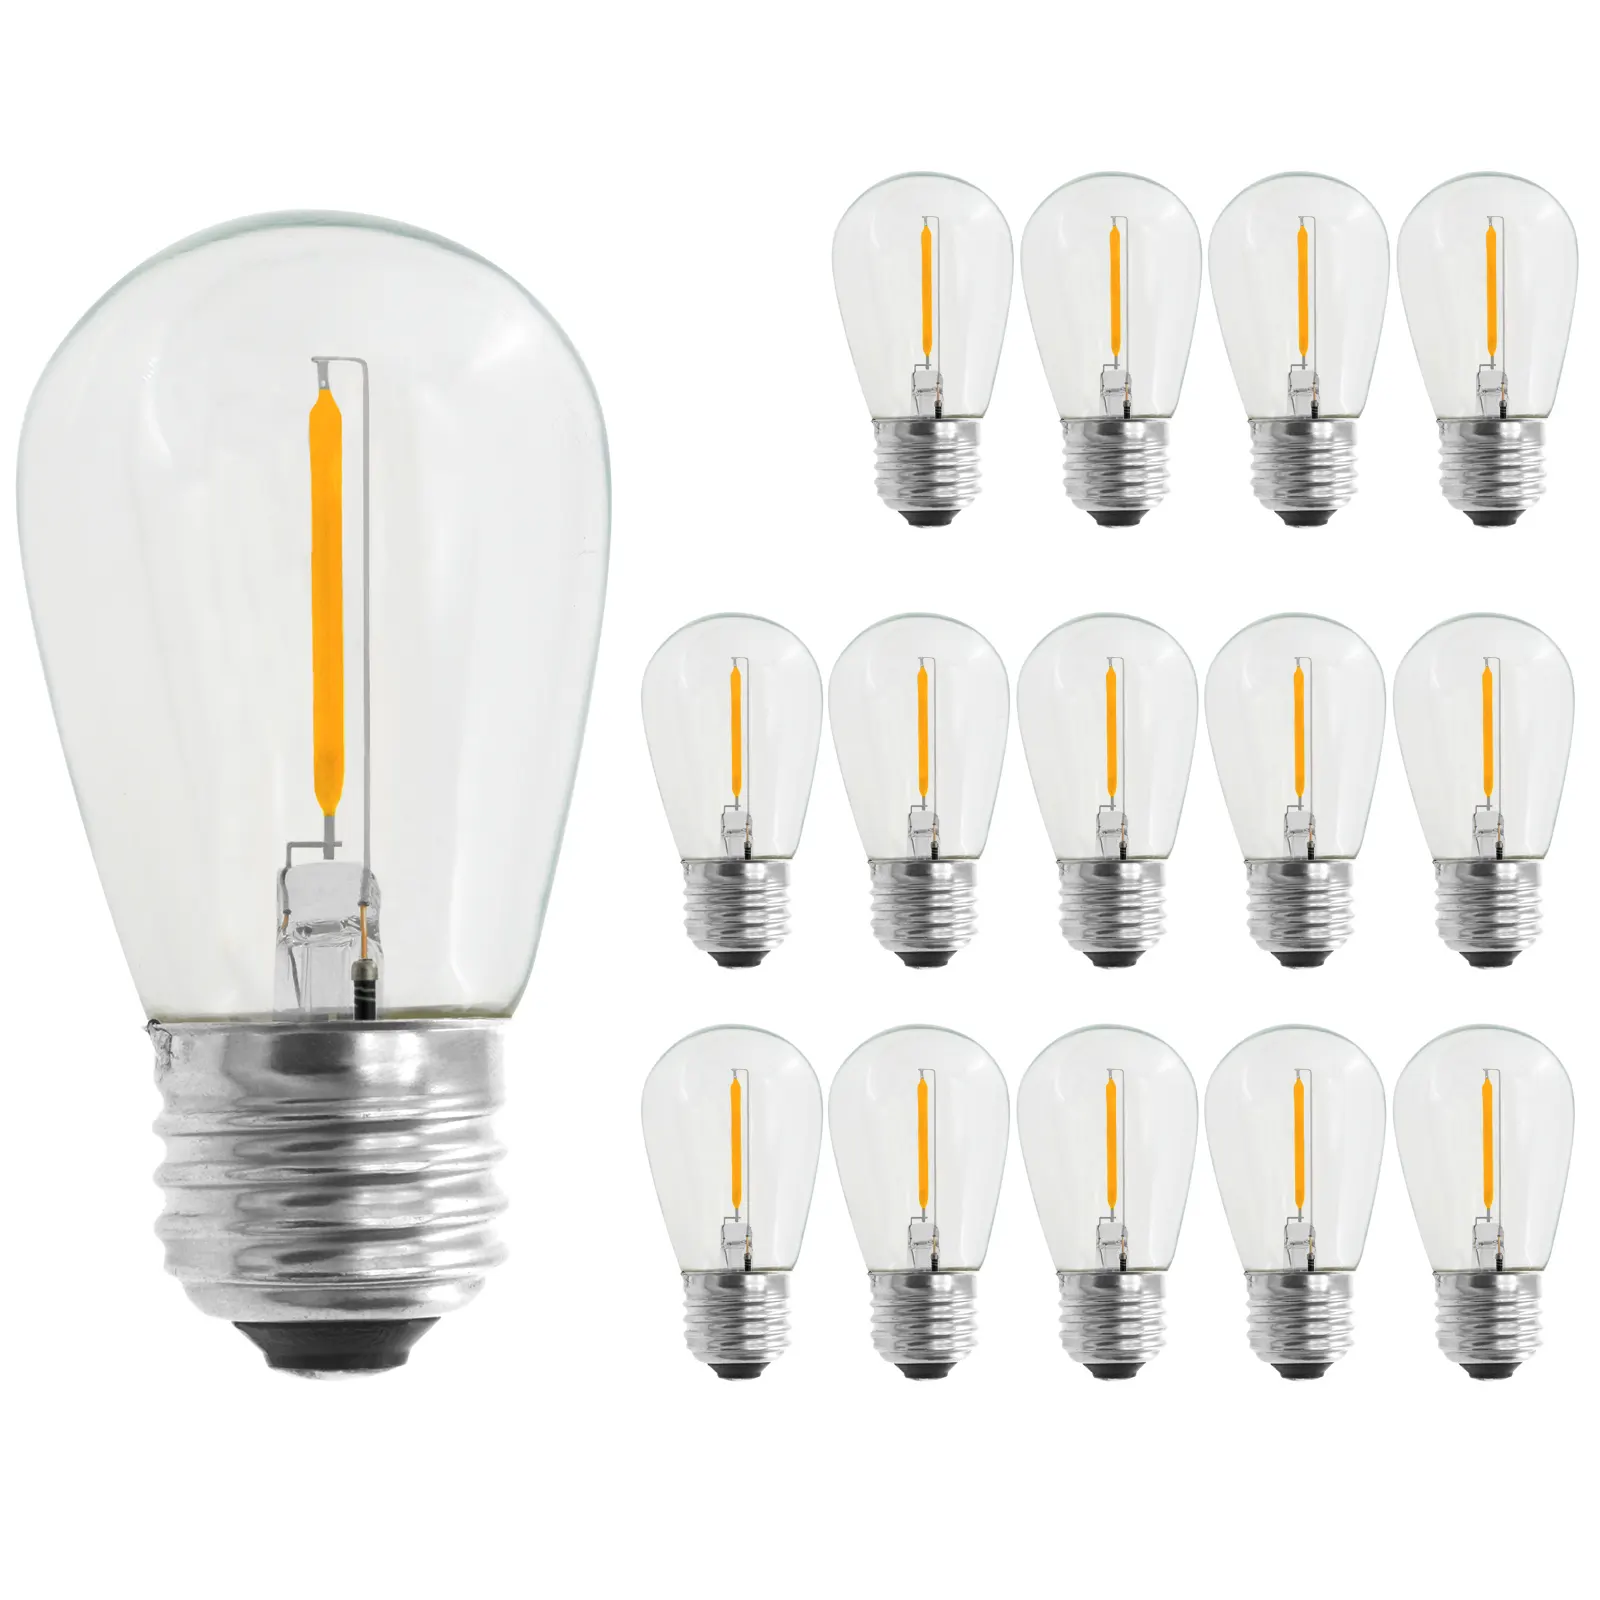 Bulb Hot Sale UL Certification 220V E26 S14 0.7W Plastic Shatterproof Led Filament Bulb For Outdoor String Light